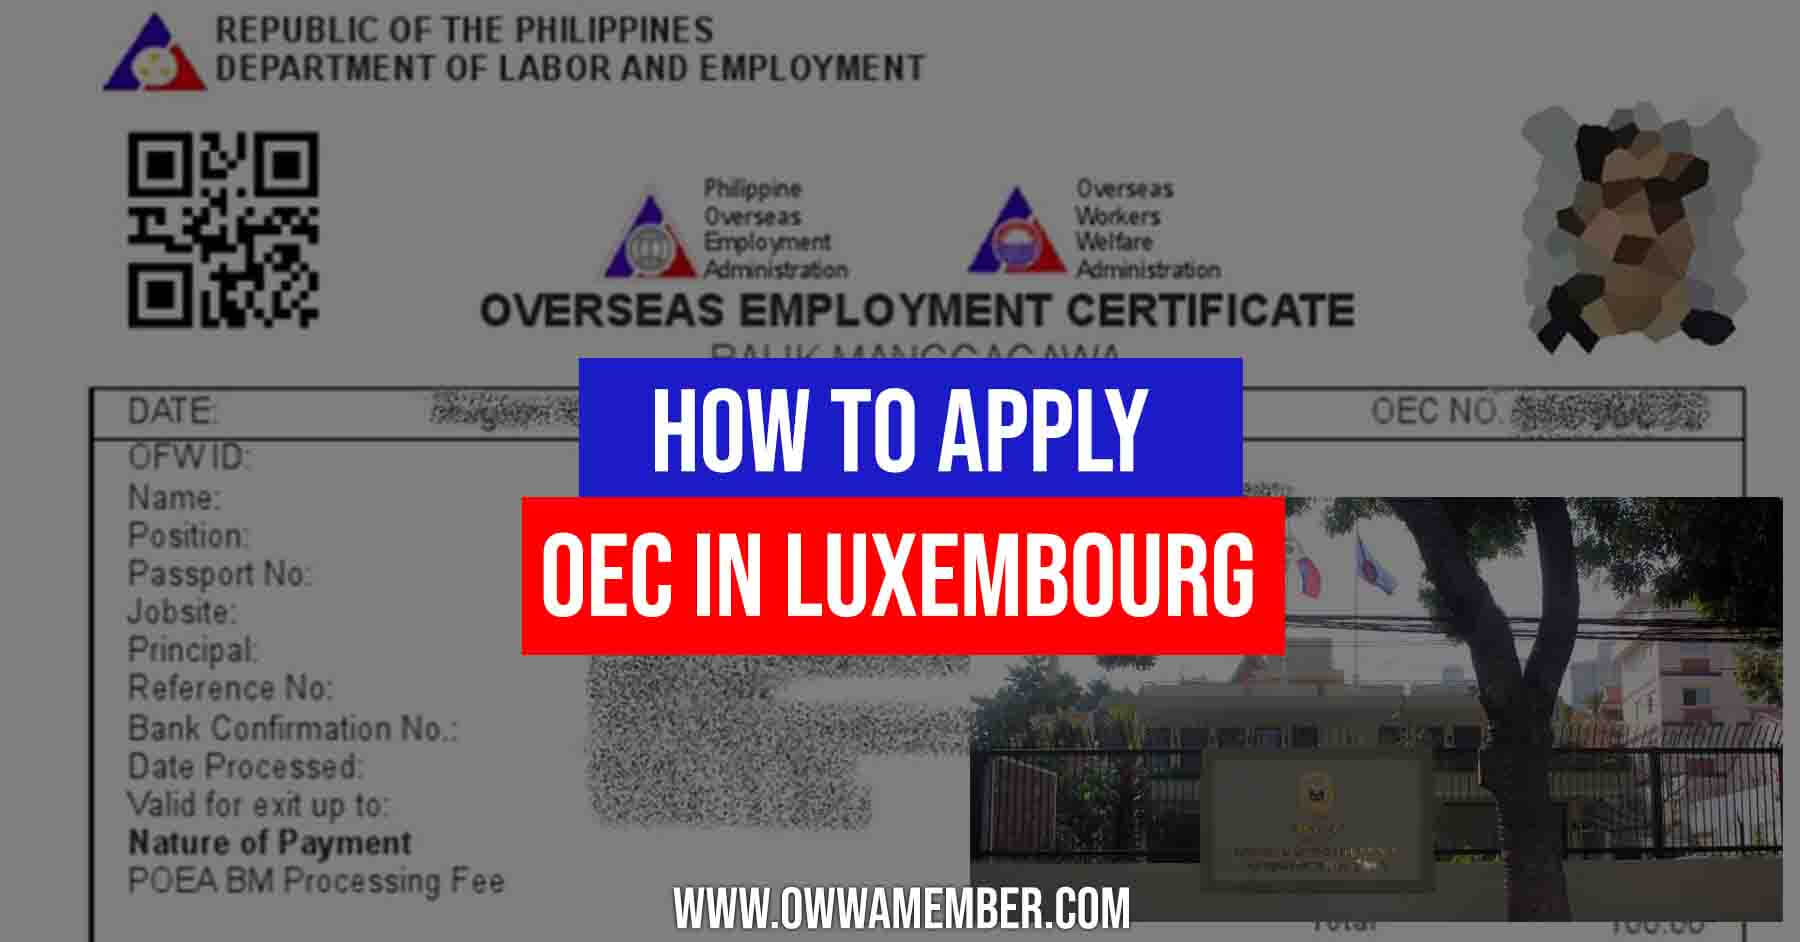 oec overseas employment certificate balik manggagawa ofw in luxembourg